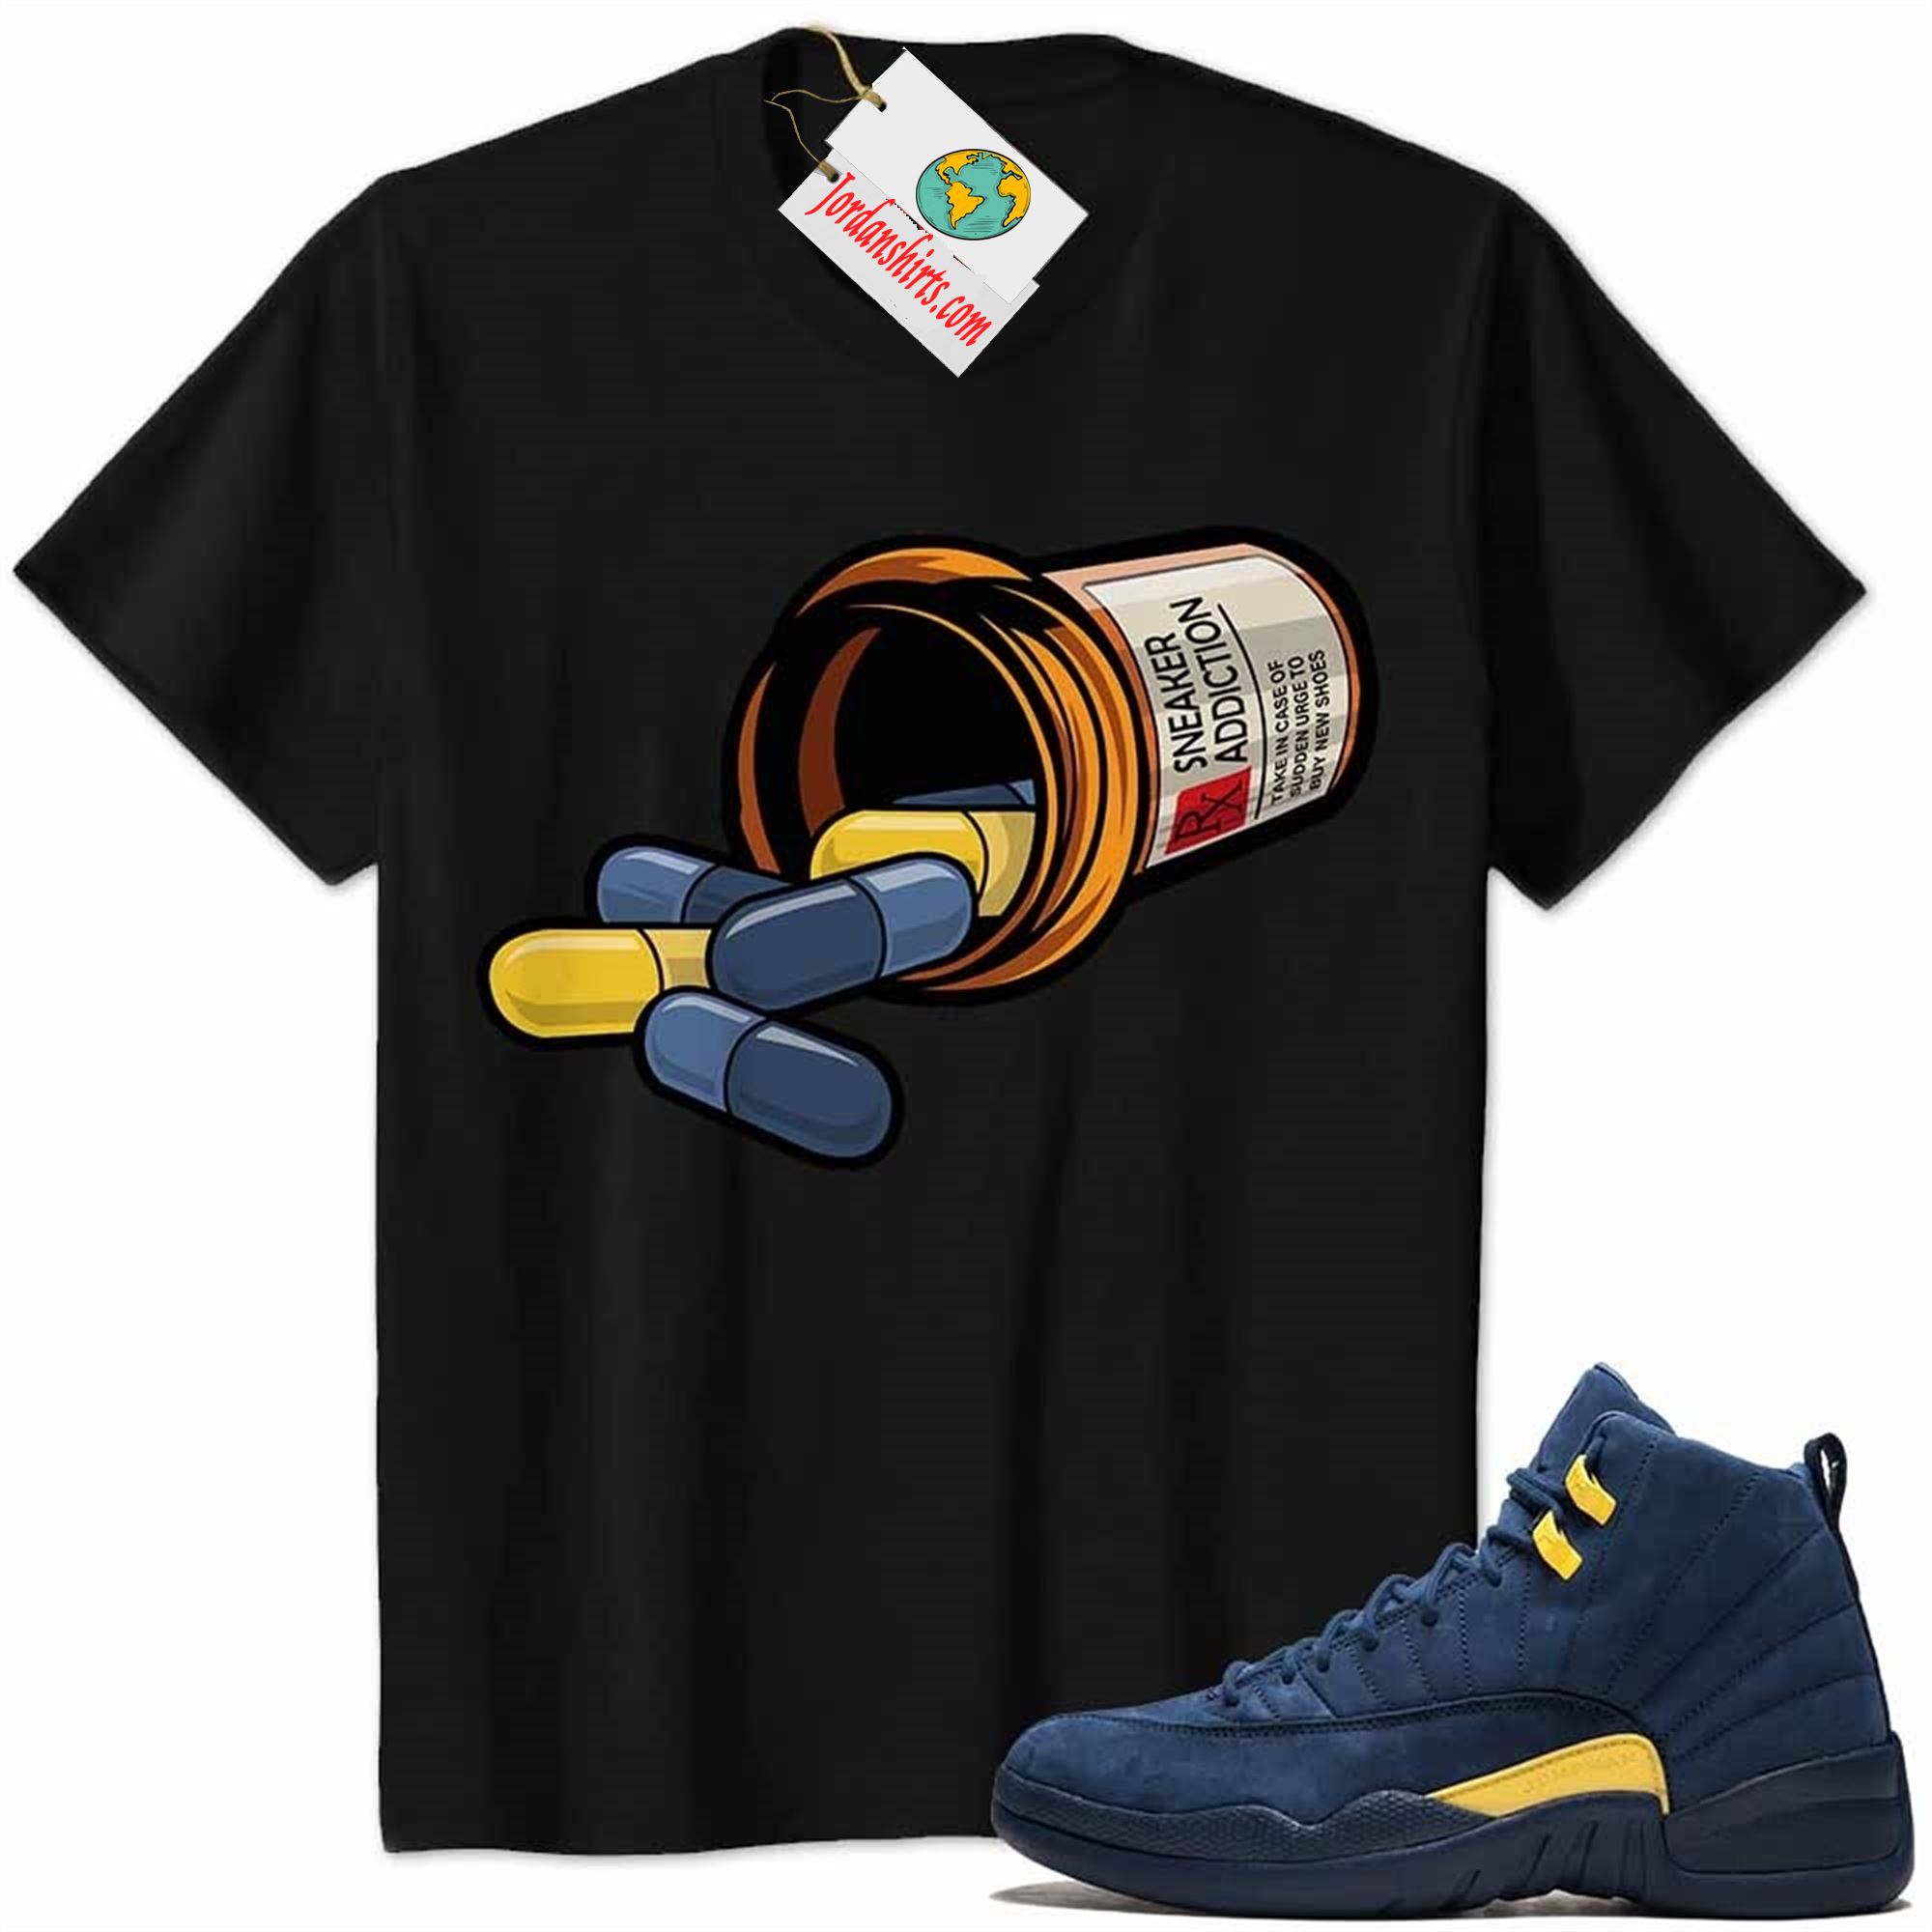 Jordan 12 Shirt, Rx Drugs Pill Bottle Sneaker Addiction Black Air Jordan 12 Michigan 12s Full Size Up To 5xl